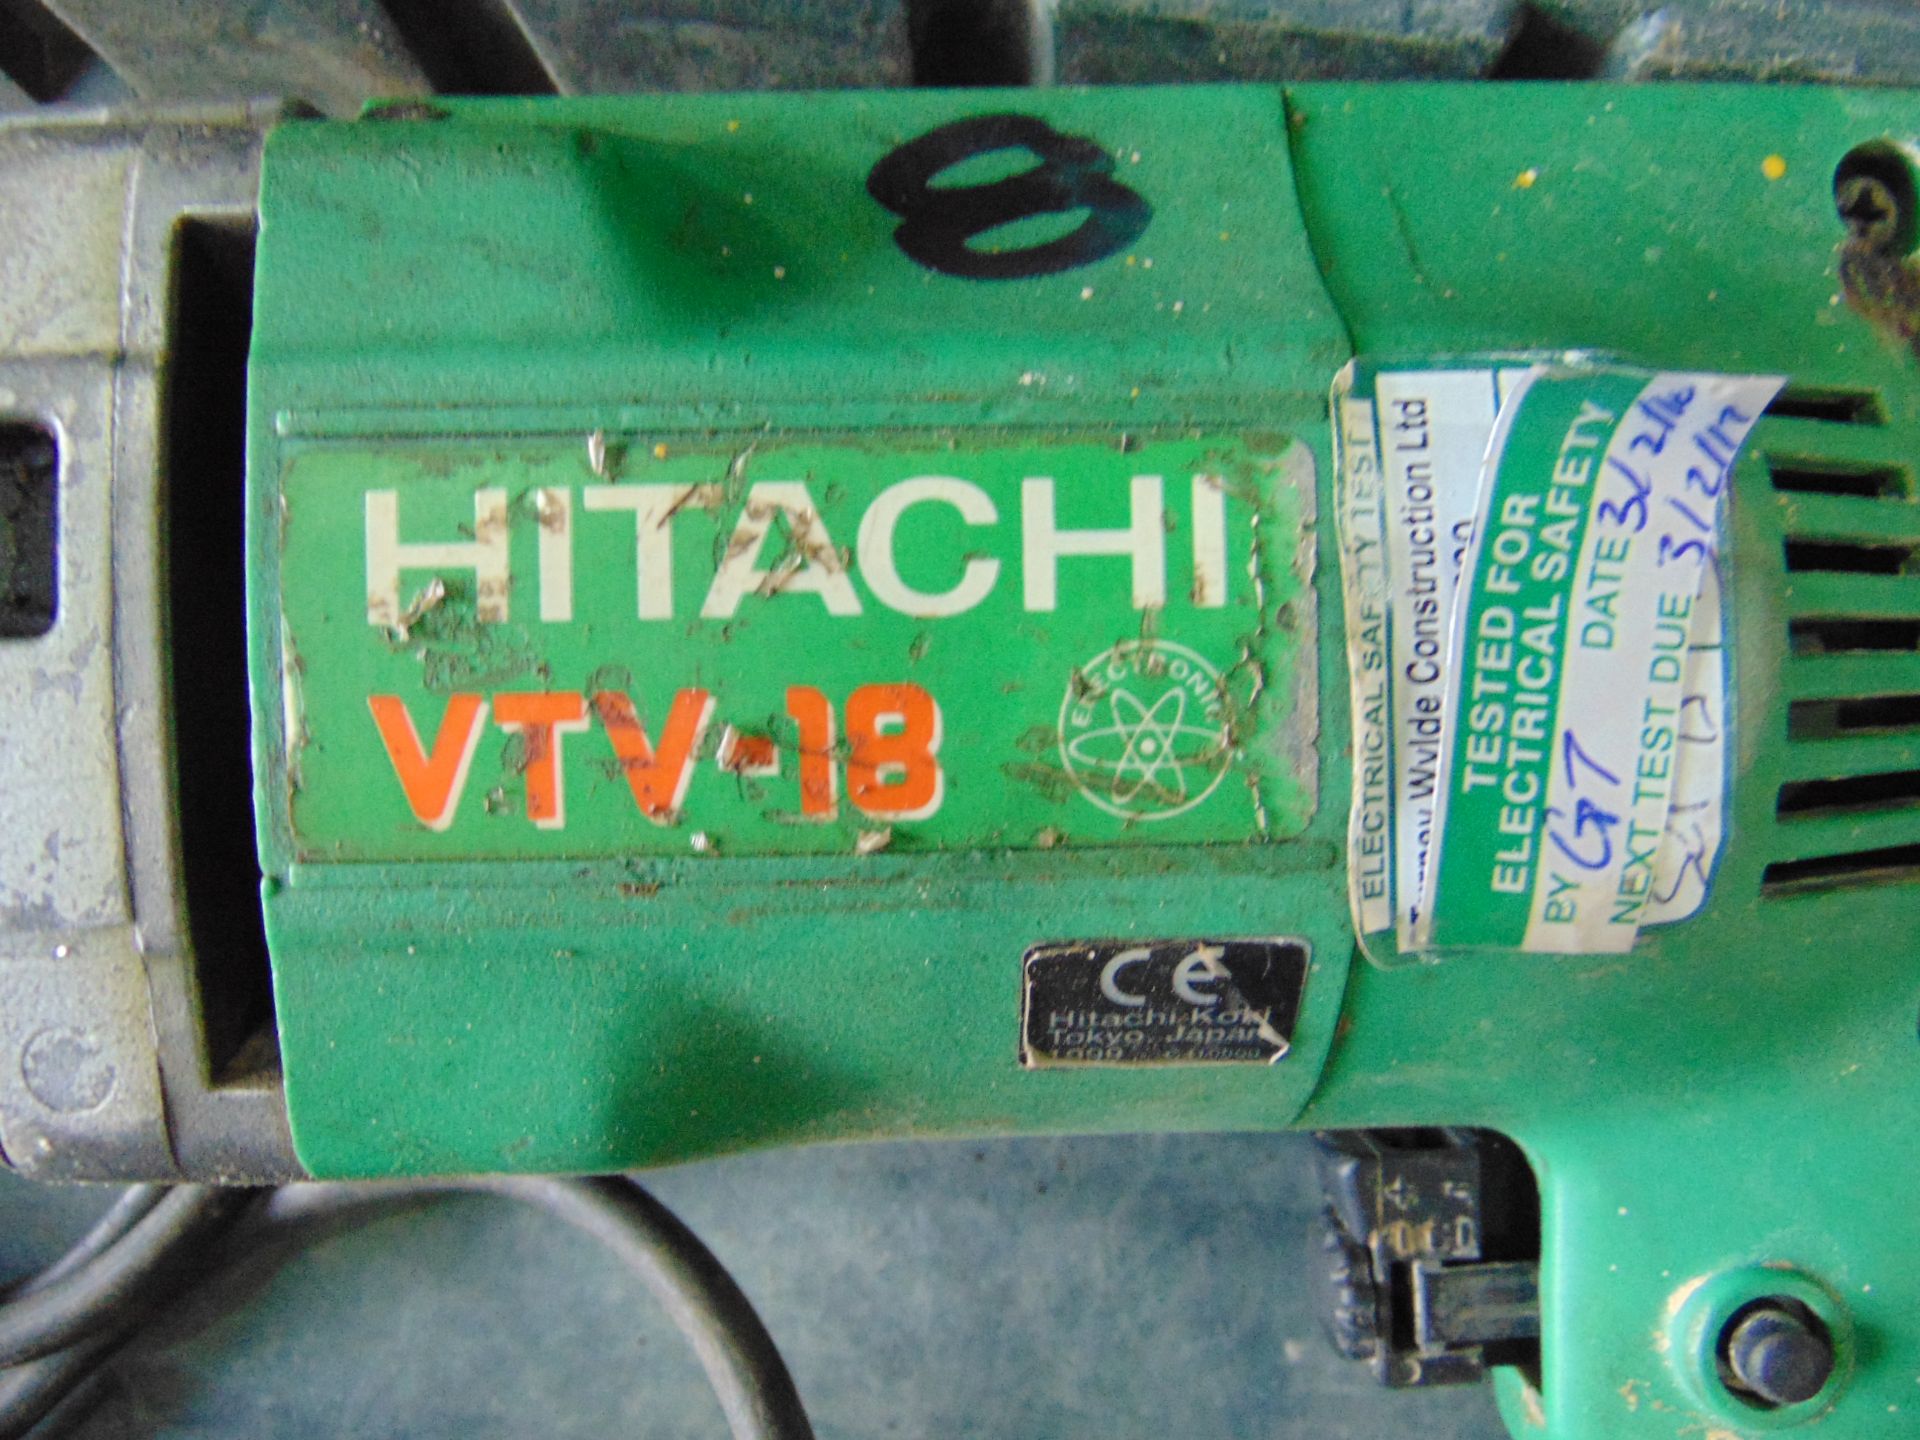 Hitachi Vtv18 Rotary Impact Drill 110v - Image 4 of 6